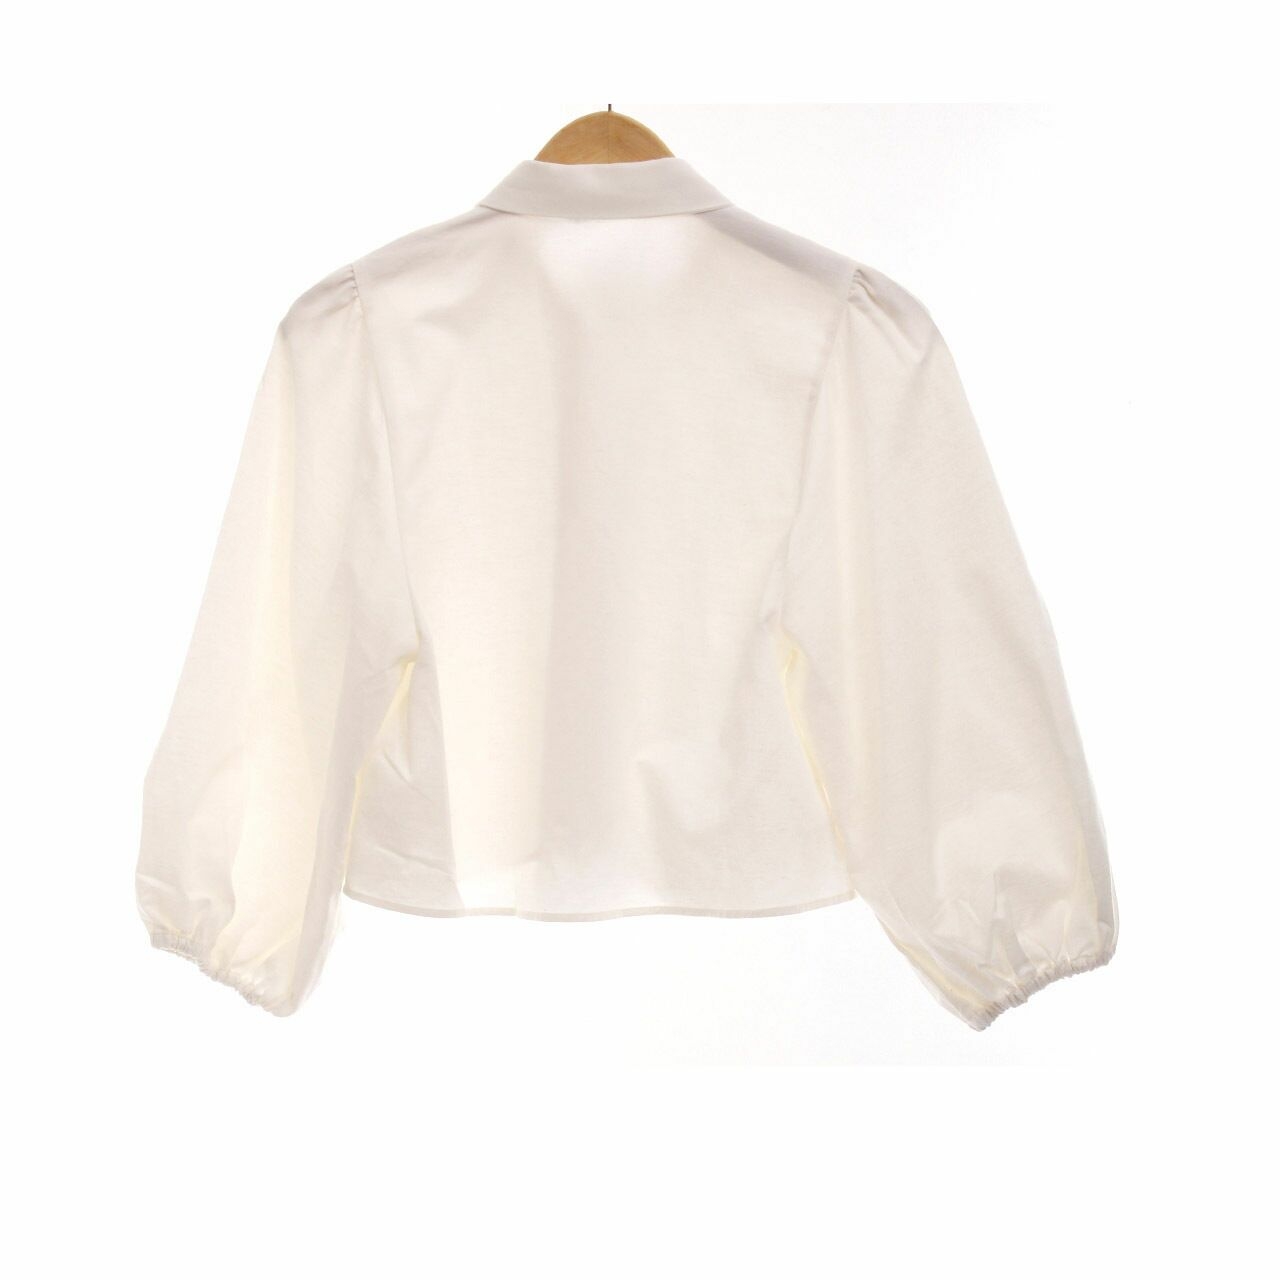 Zara White Long Sleeve Shirt